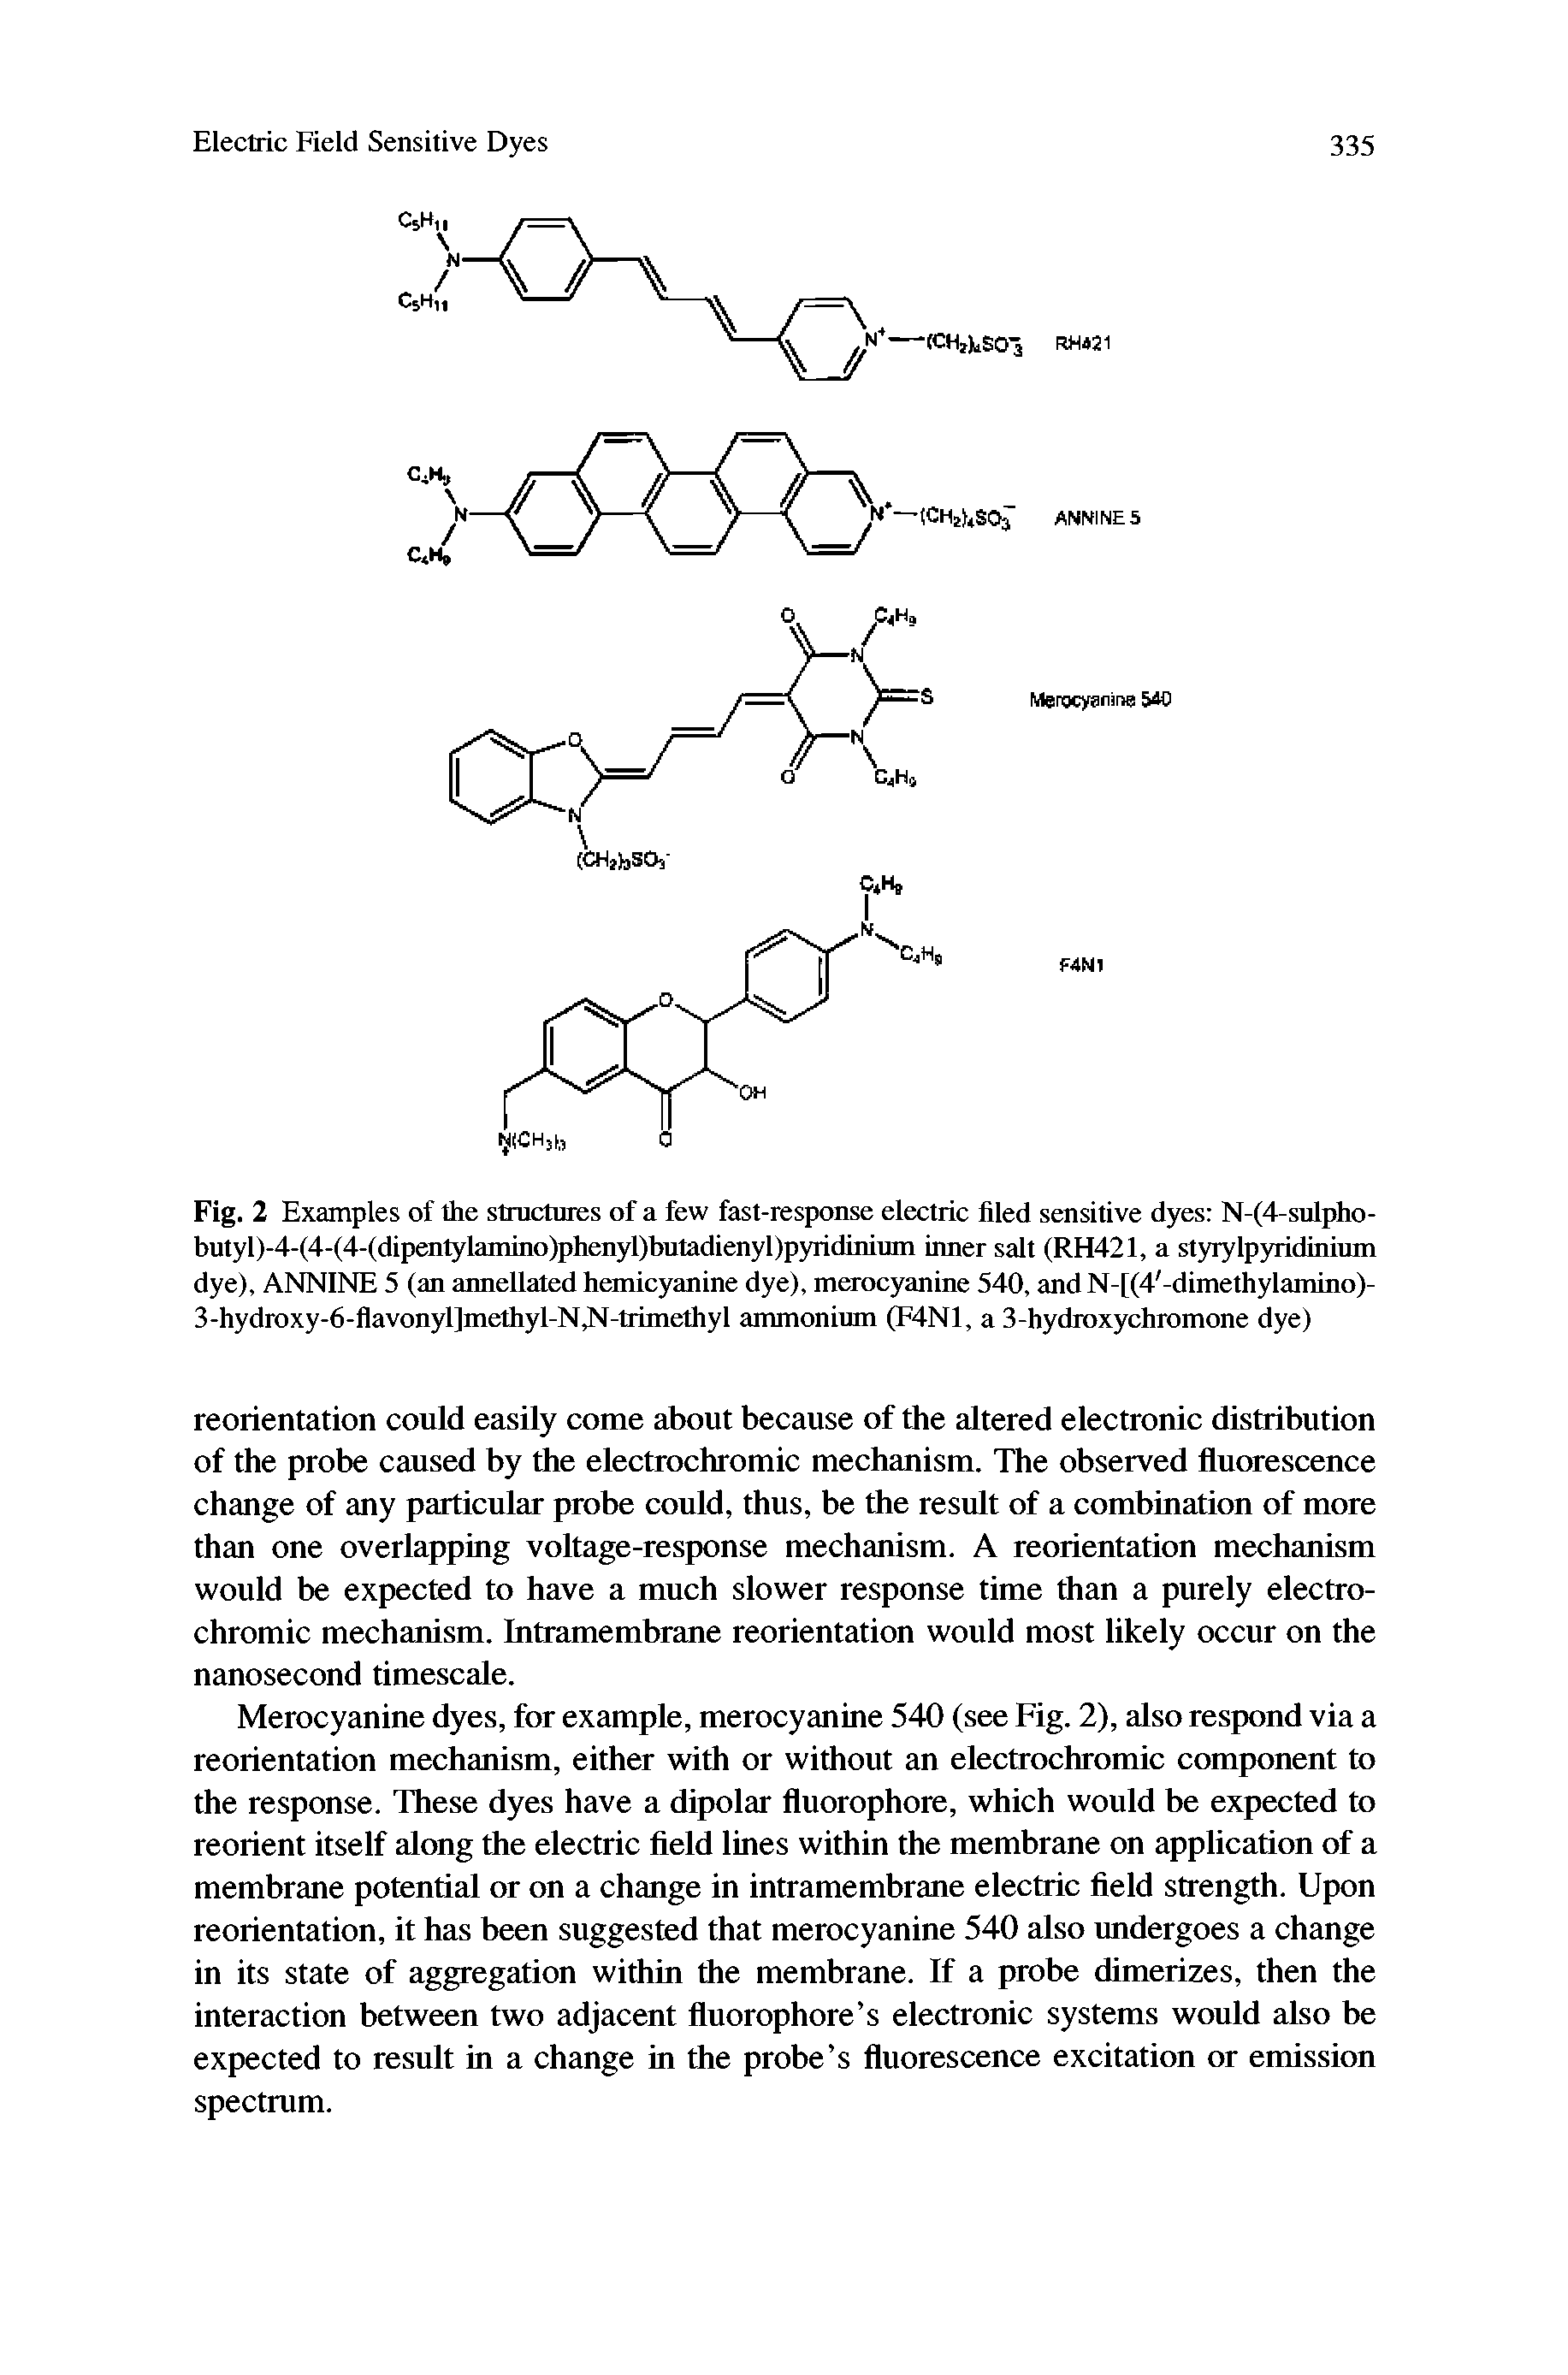 Fig. 2 Examples of the structures of a few fast-response electric filed sensitive dyes N-(4-sulpho-butyl)-4-(4-(4-(dipentylamino)phenyl)butadienyl)pyridinium inner salt (RH421, a styrylpyridinium dye), ANNINE 5 (an annellated hemicyanine dye), merocyanine 540, and N-[(4 -dimethylamino)-3-hydroxy-6-flavonyl mcthyl-N,N-trimcthyl ammonium (F4N1, a 3-hydroxychromone dye)...